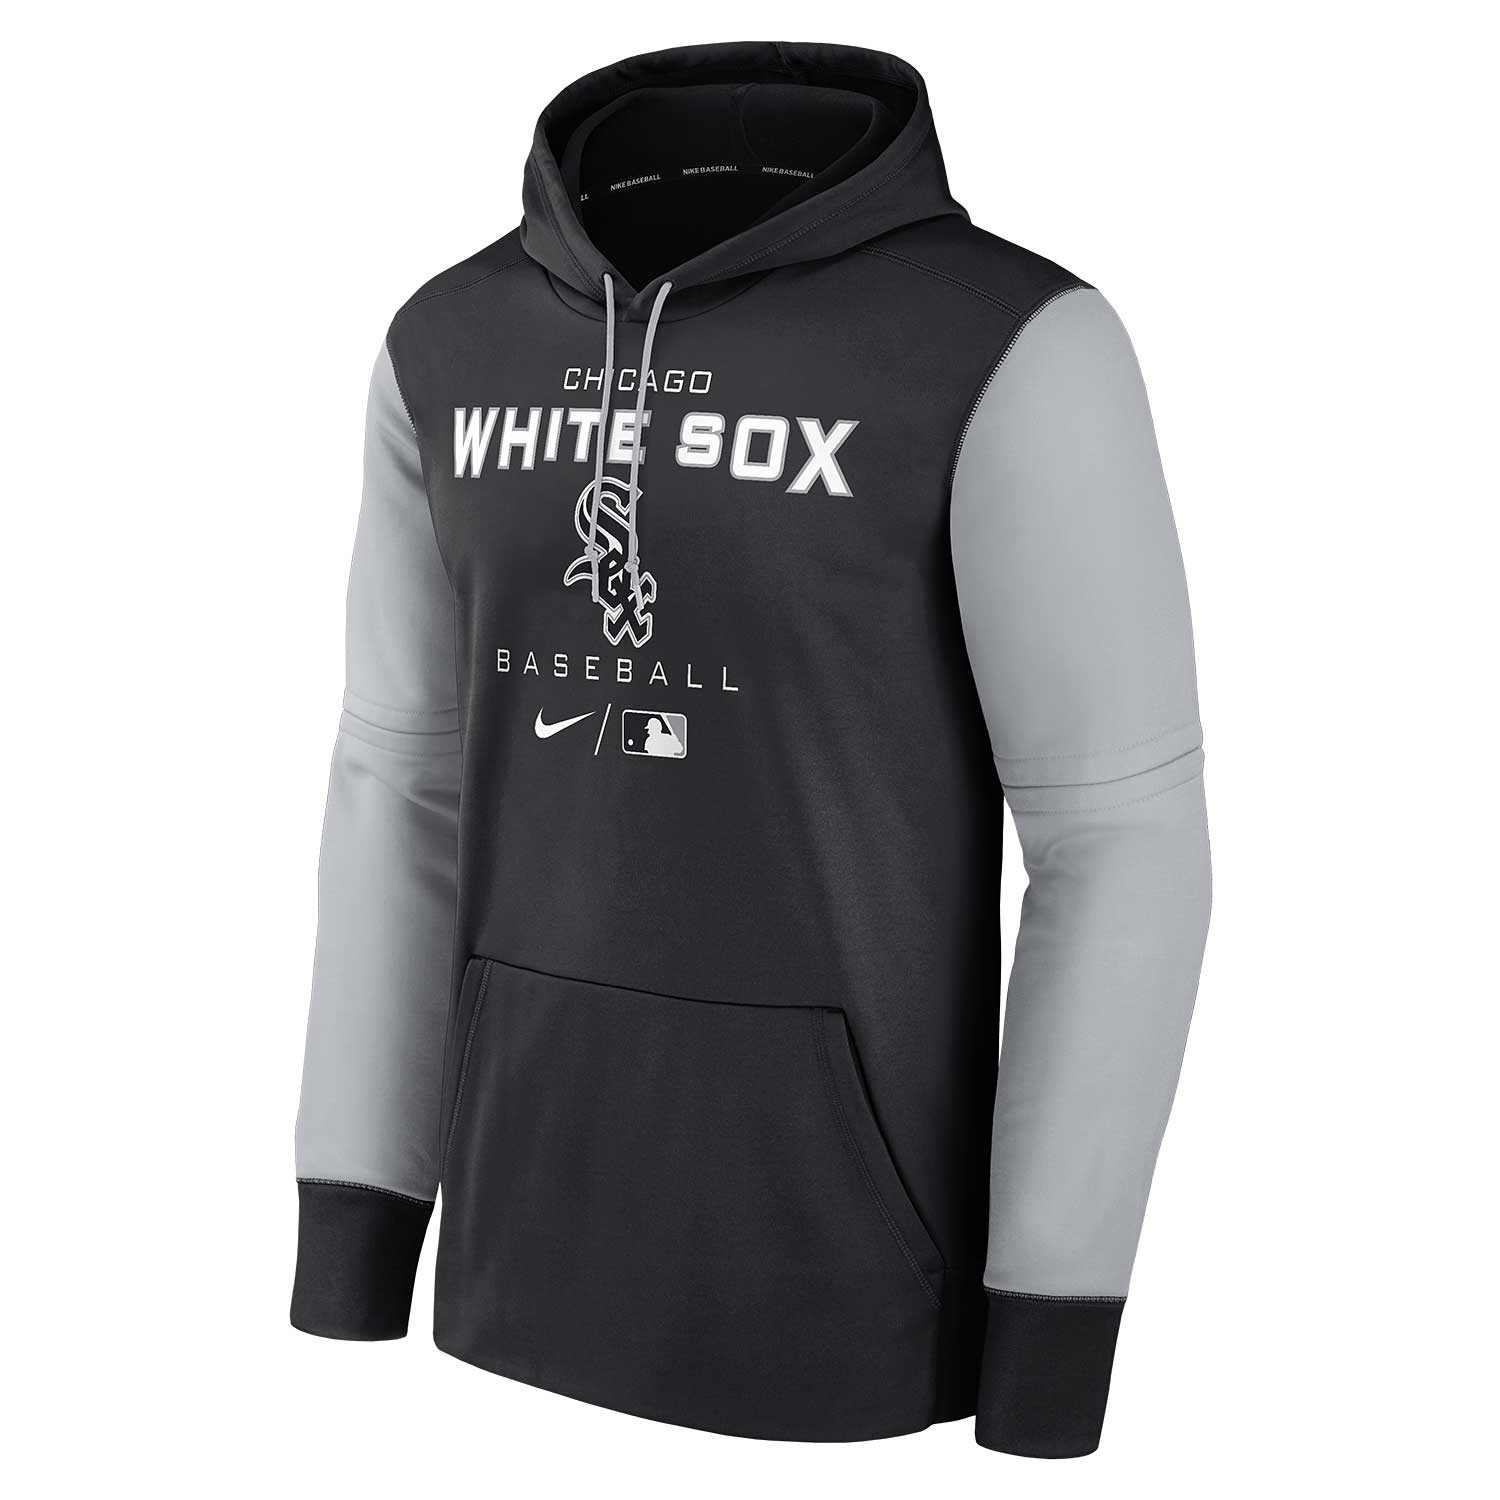 Men's Chicago White Sox Black Alternate Replica Jersey